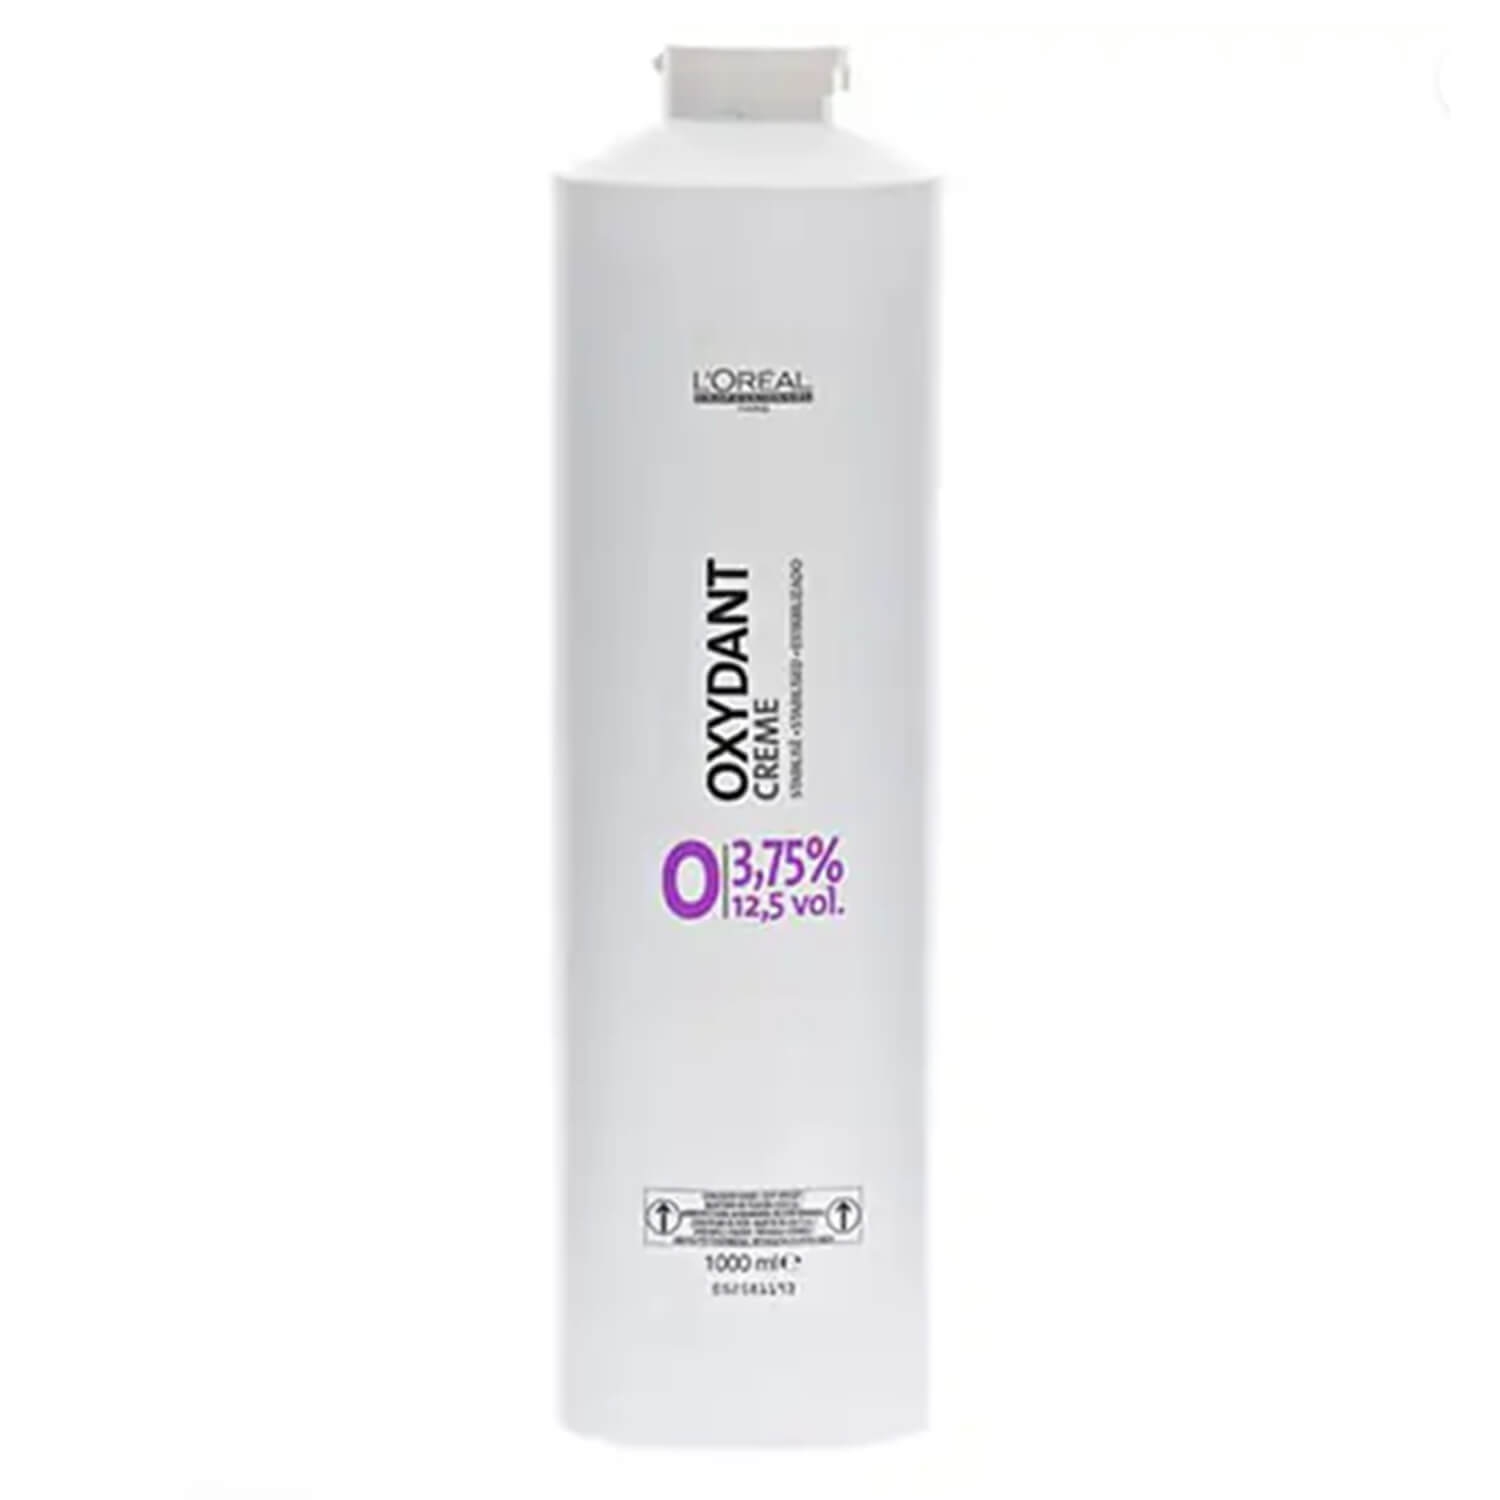 Product image from L'Oréal Oxydant - Crème 3.75% 12.5vol.